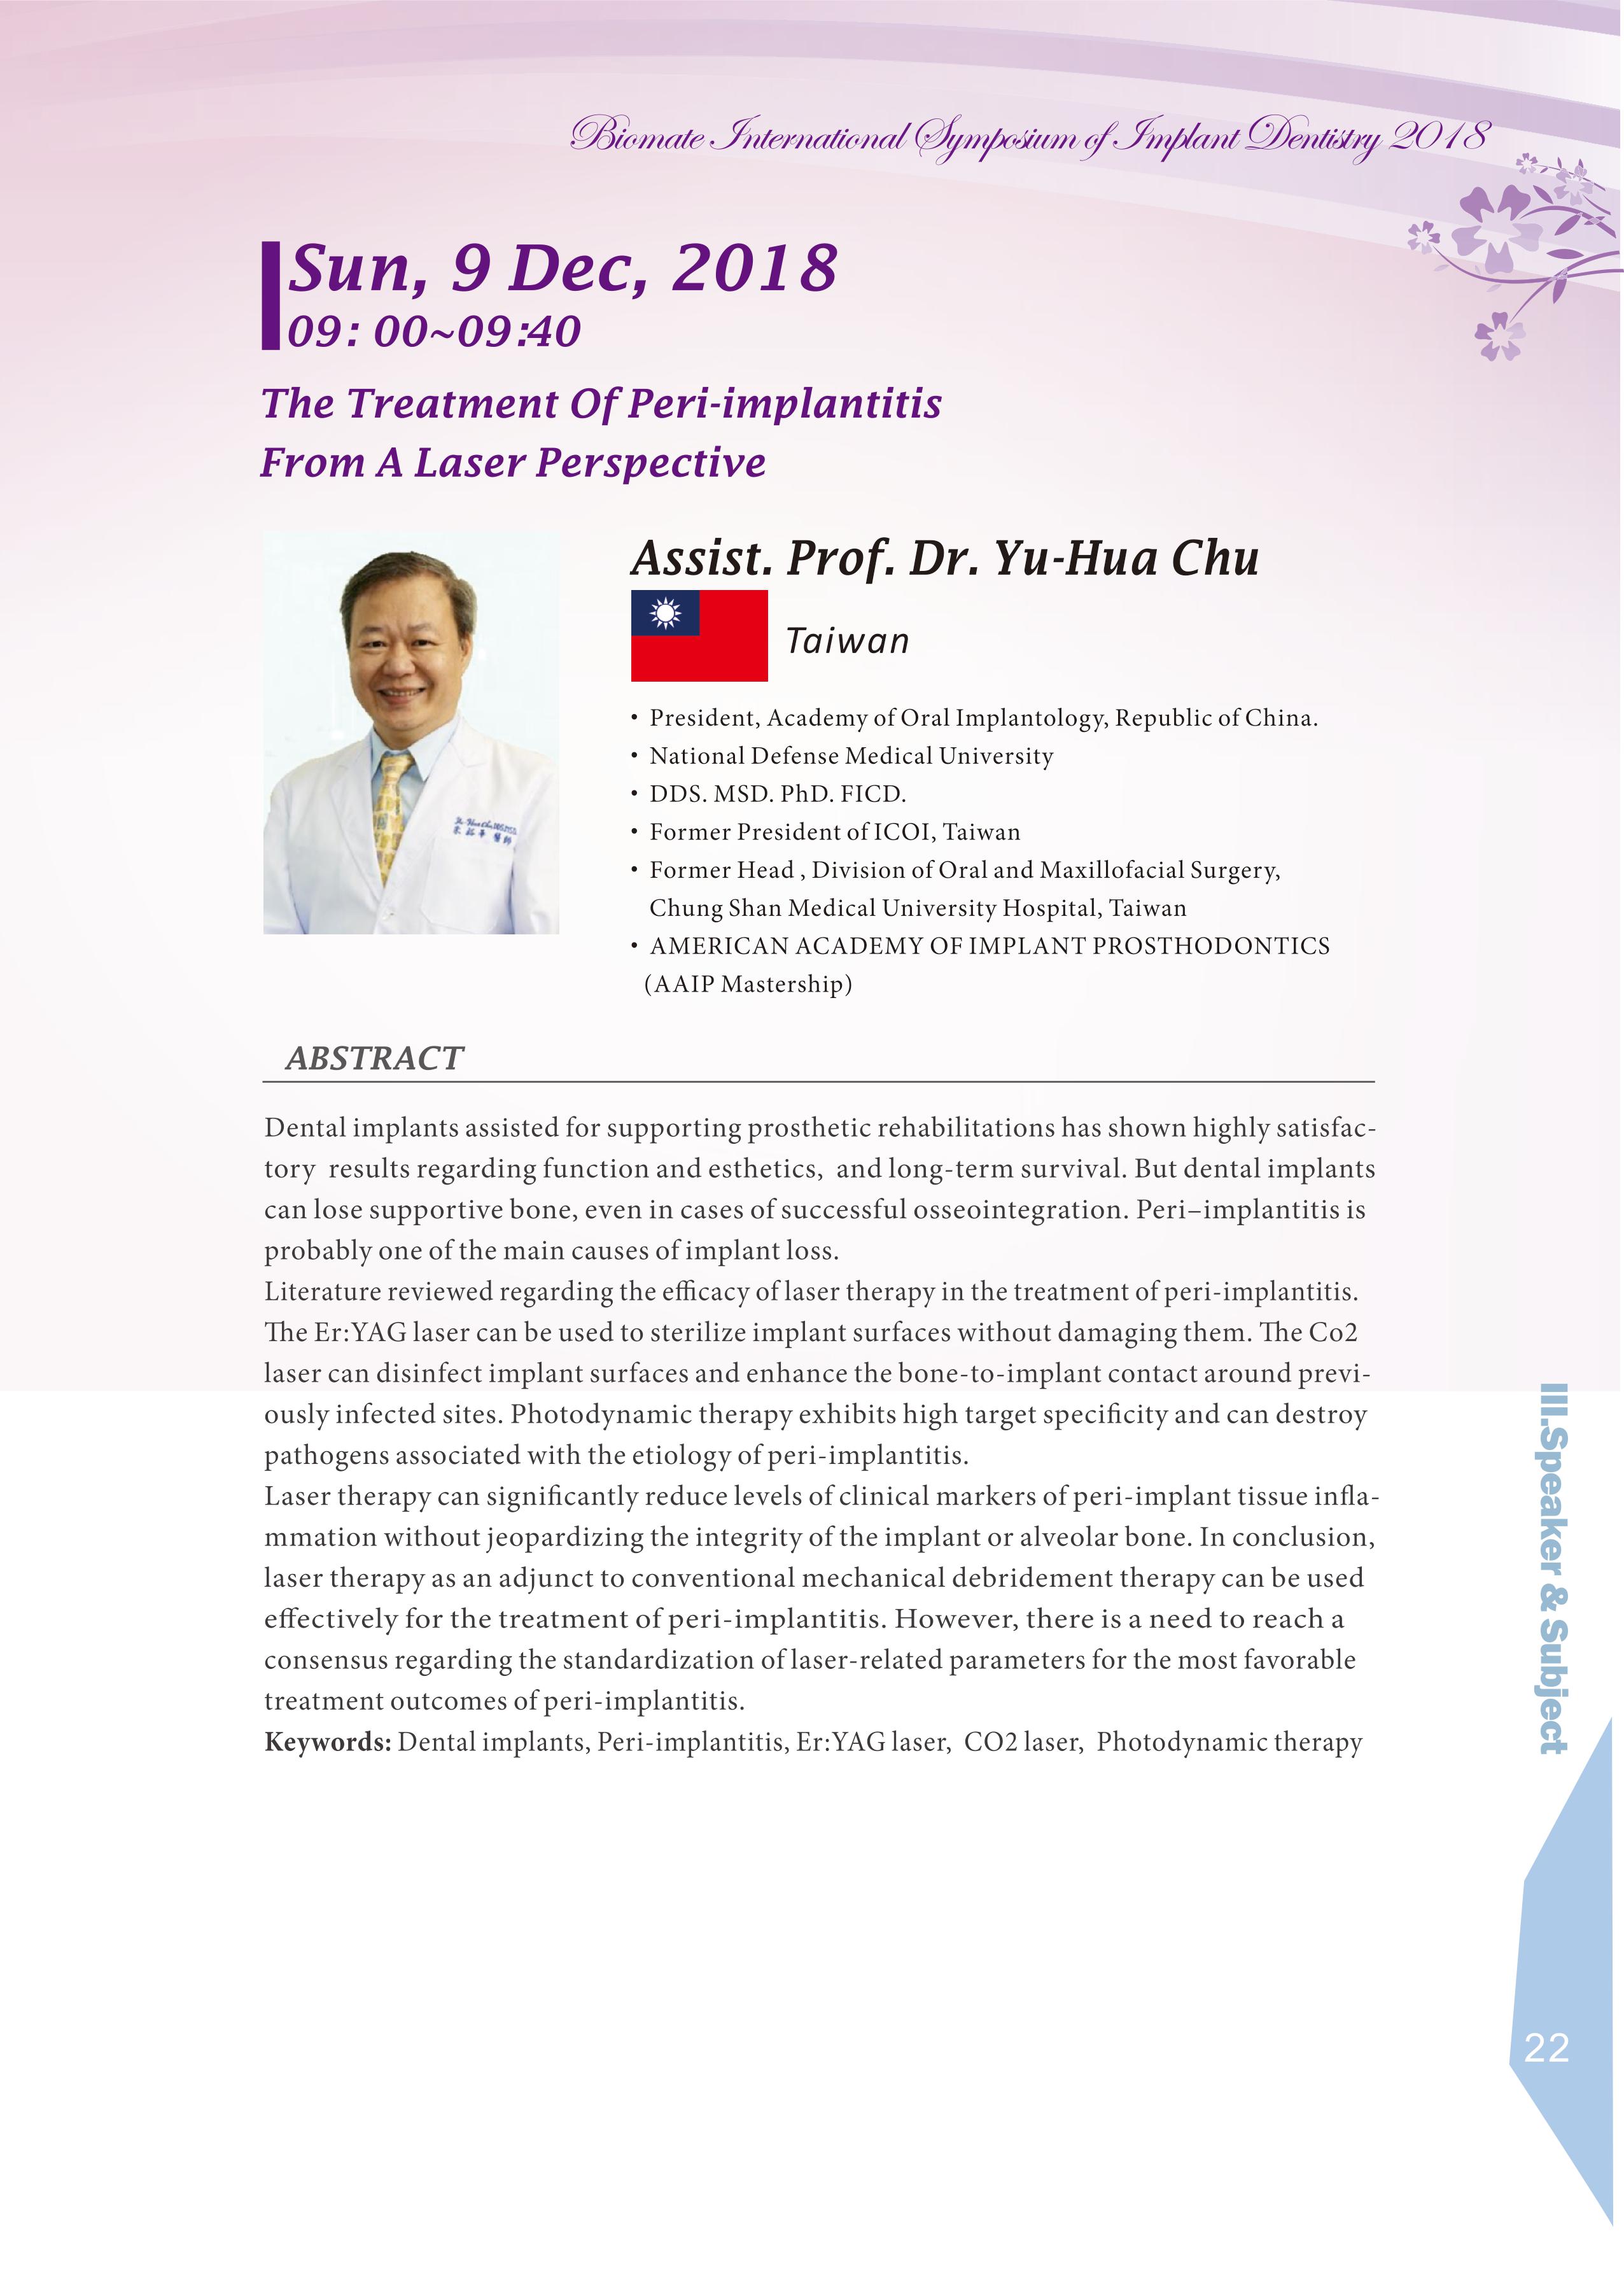 Biomate Internation Symposium of Implant Dentistry-Assist.Prof.Dr.Yu-Hua Chu